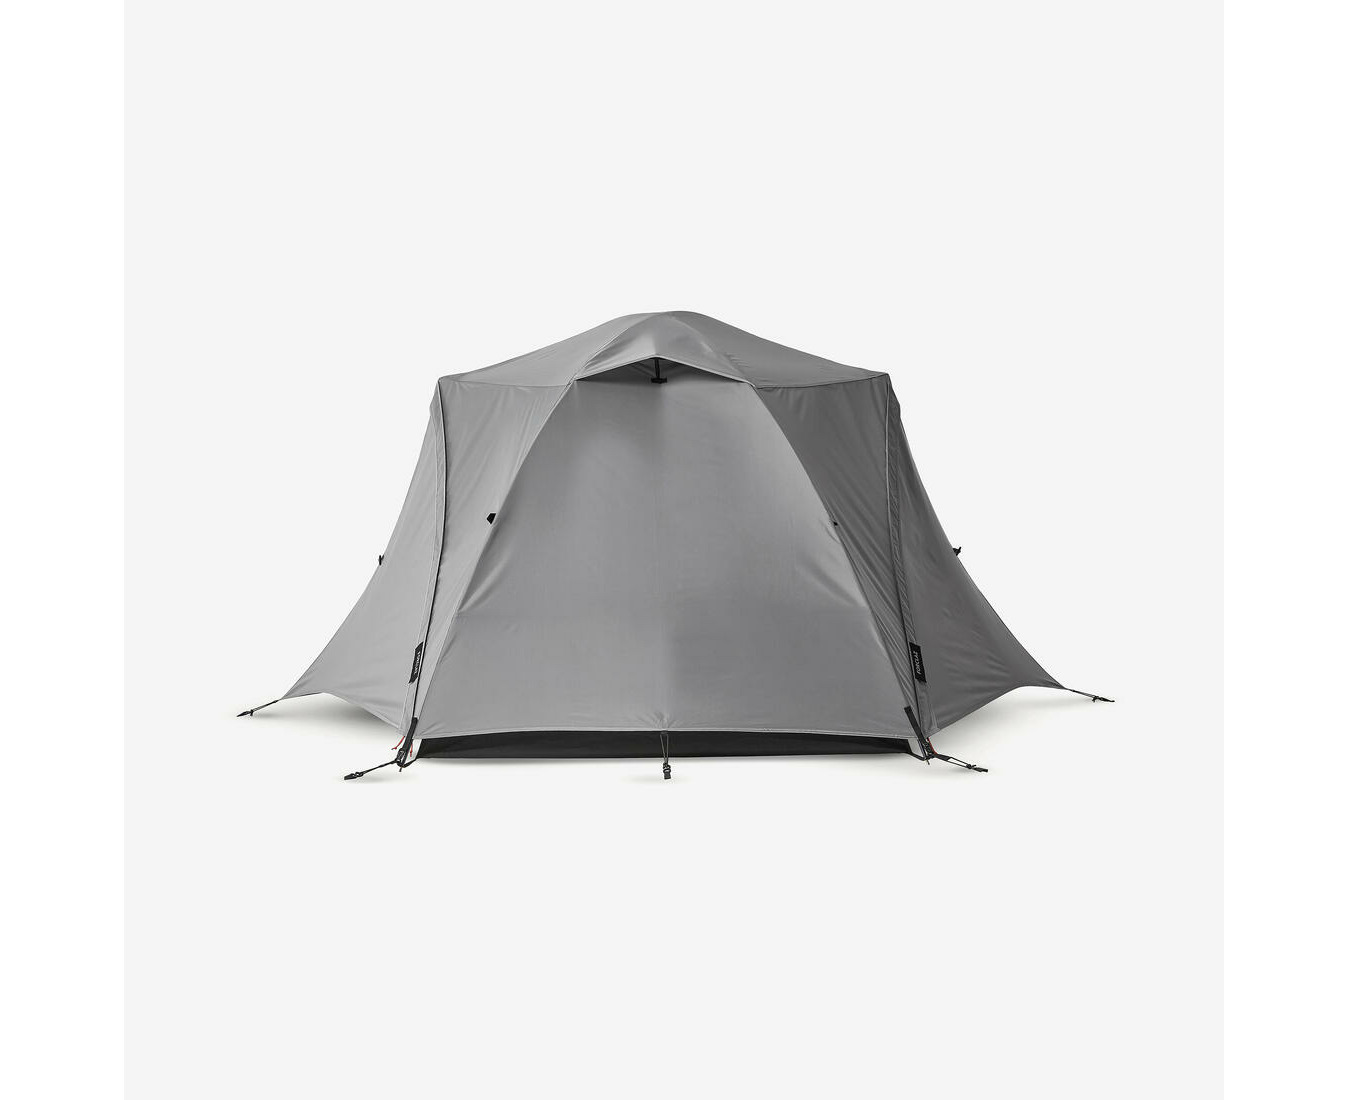 DECATHLON FORCLAZ Mesh Dome Trekking Tent 2 person - MT500